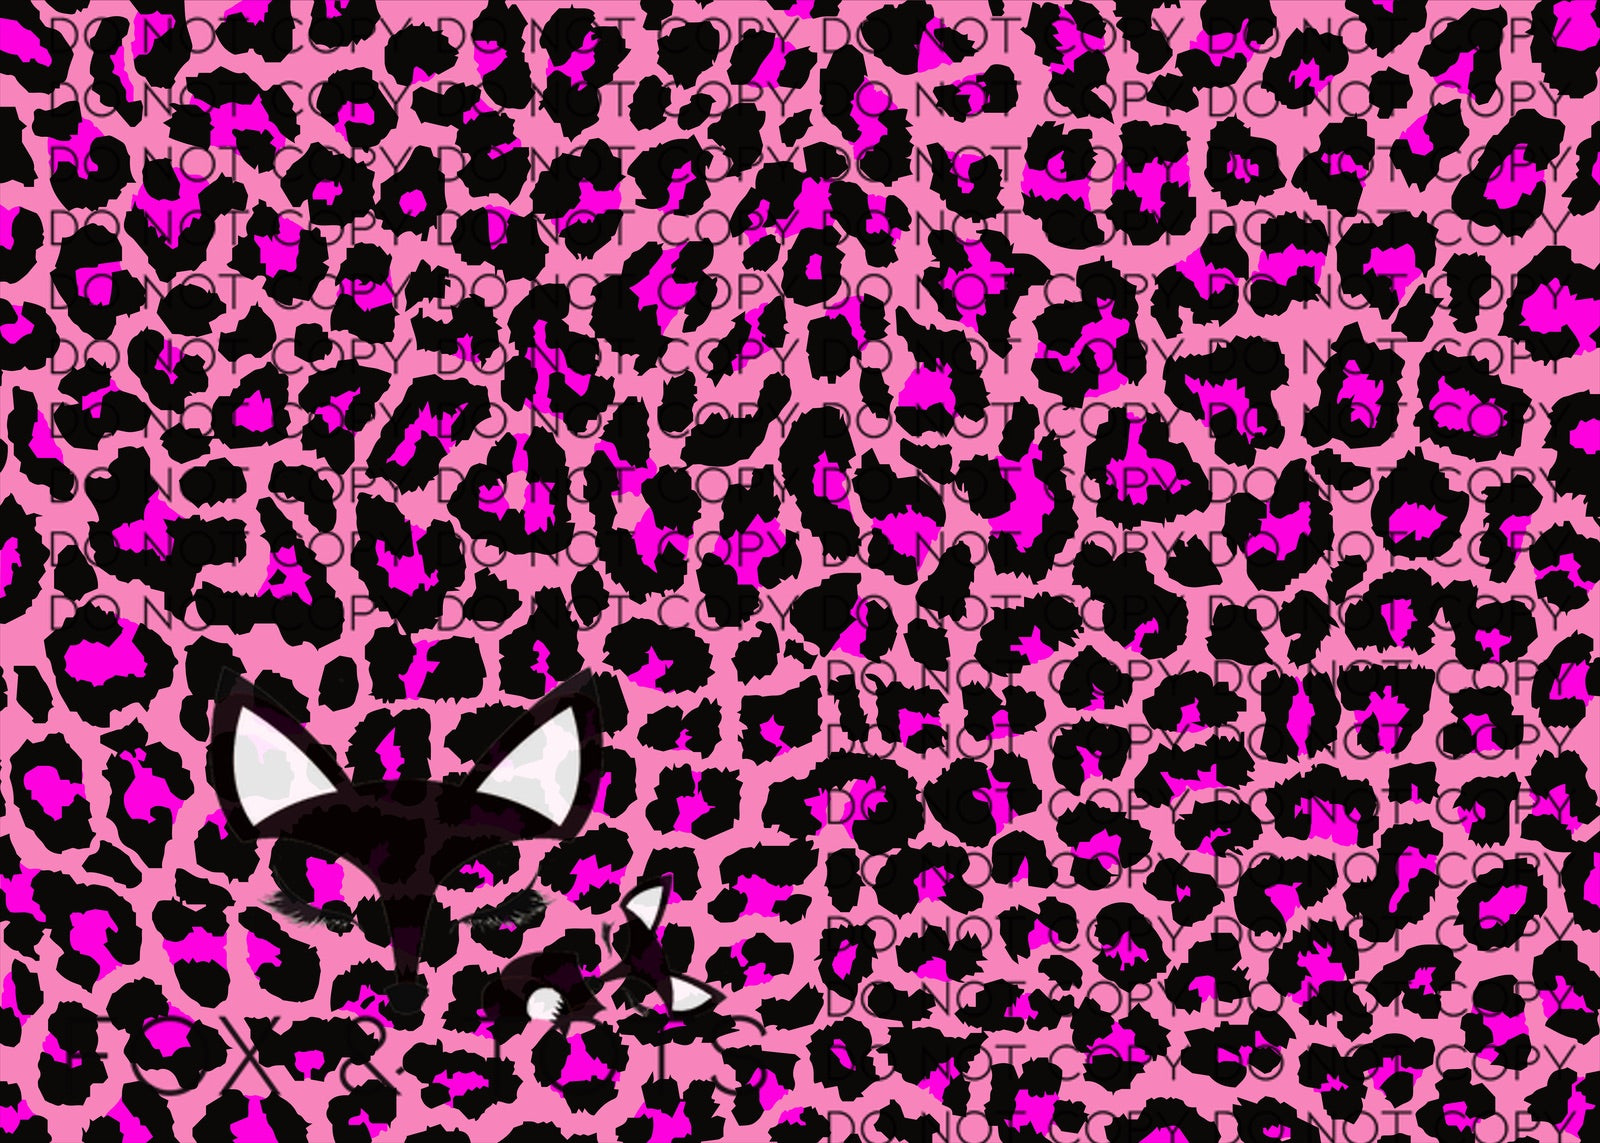 Cheetah Hearts - Pink - The Fabric Market